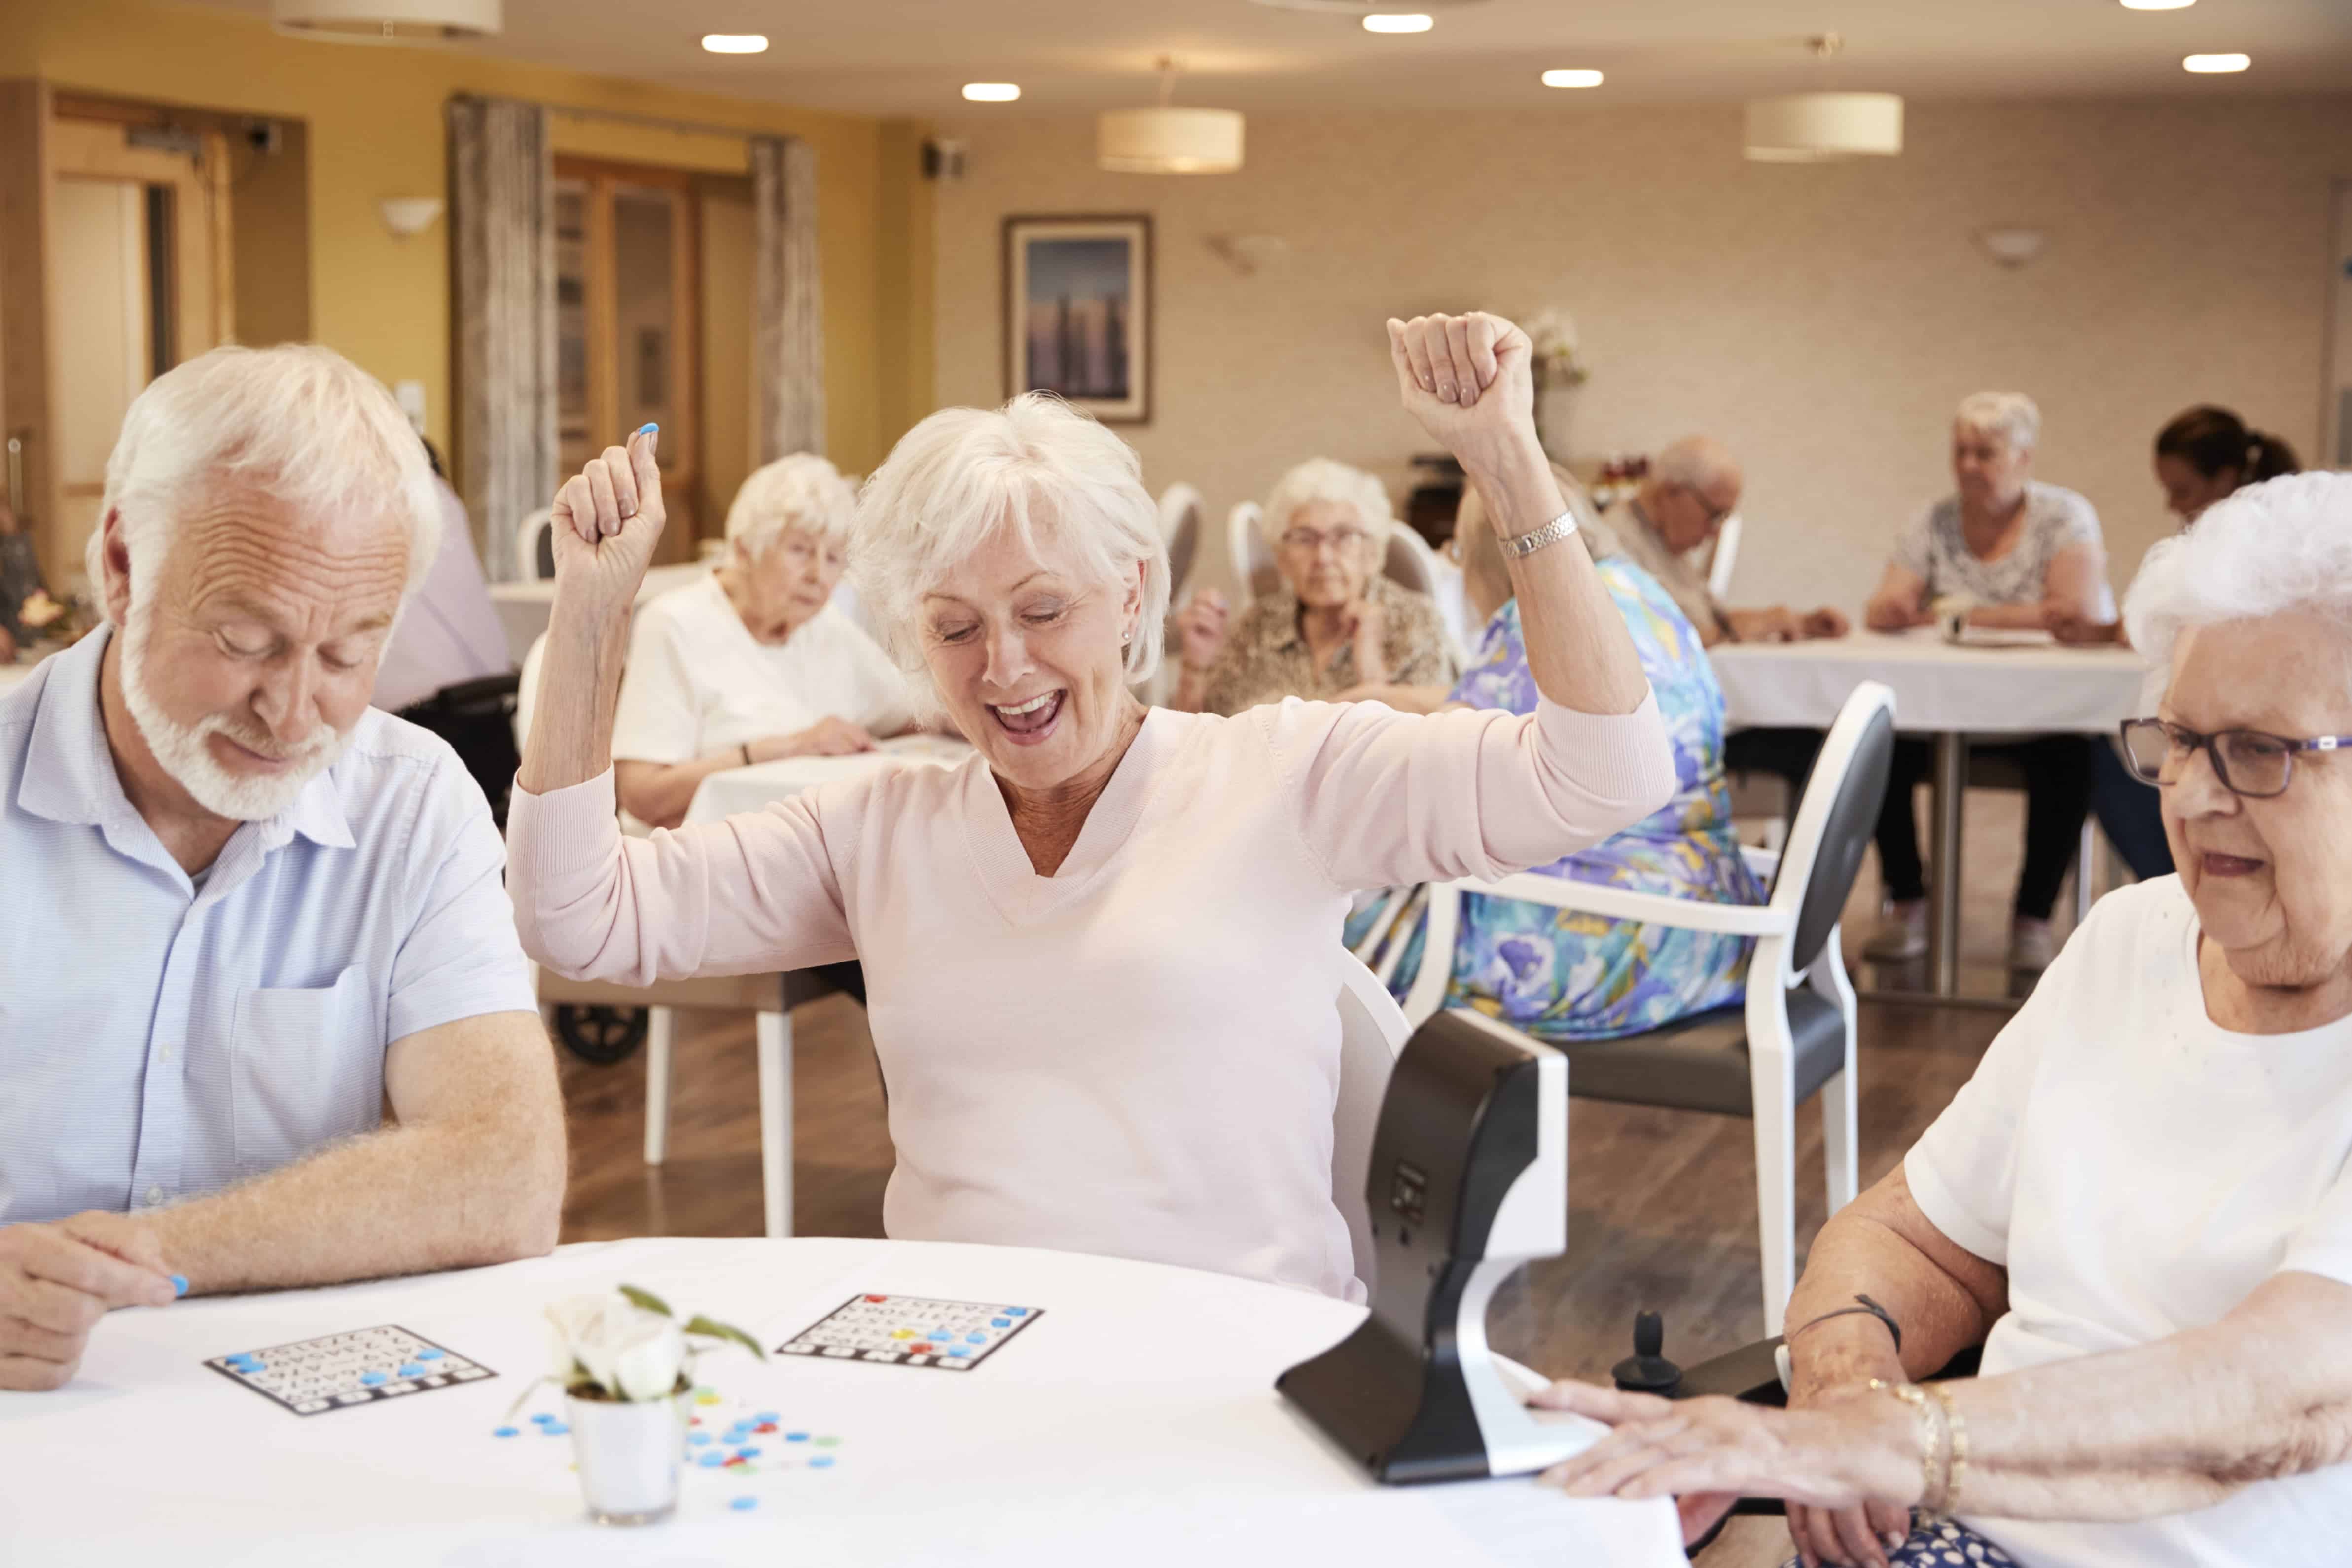 Seniors playing bingo, woman raising her hands in triumph